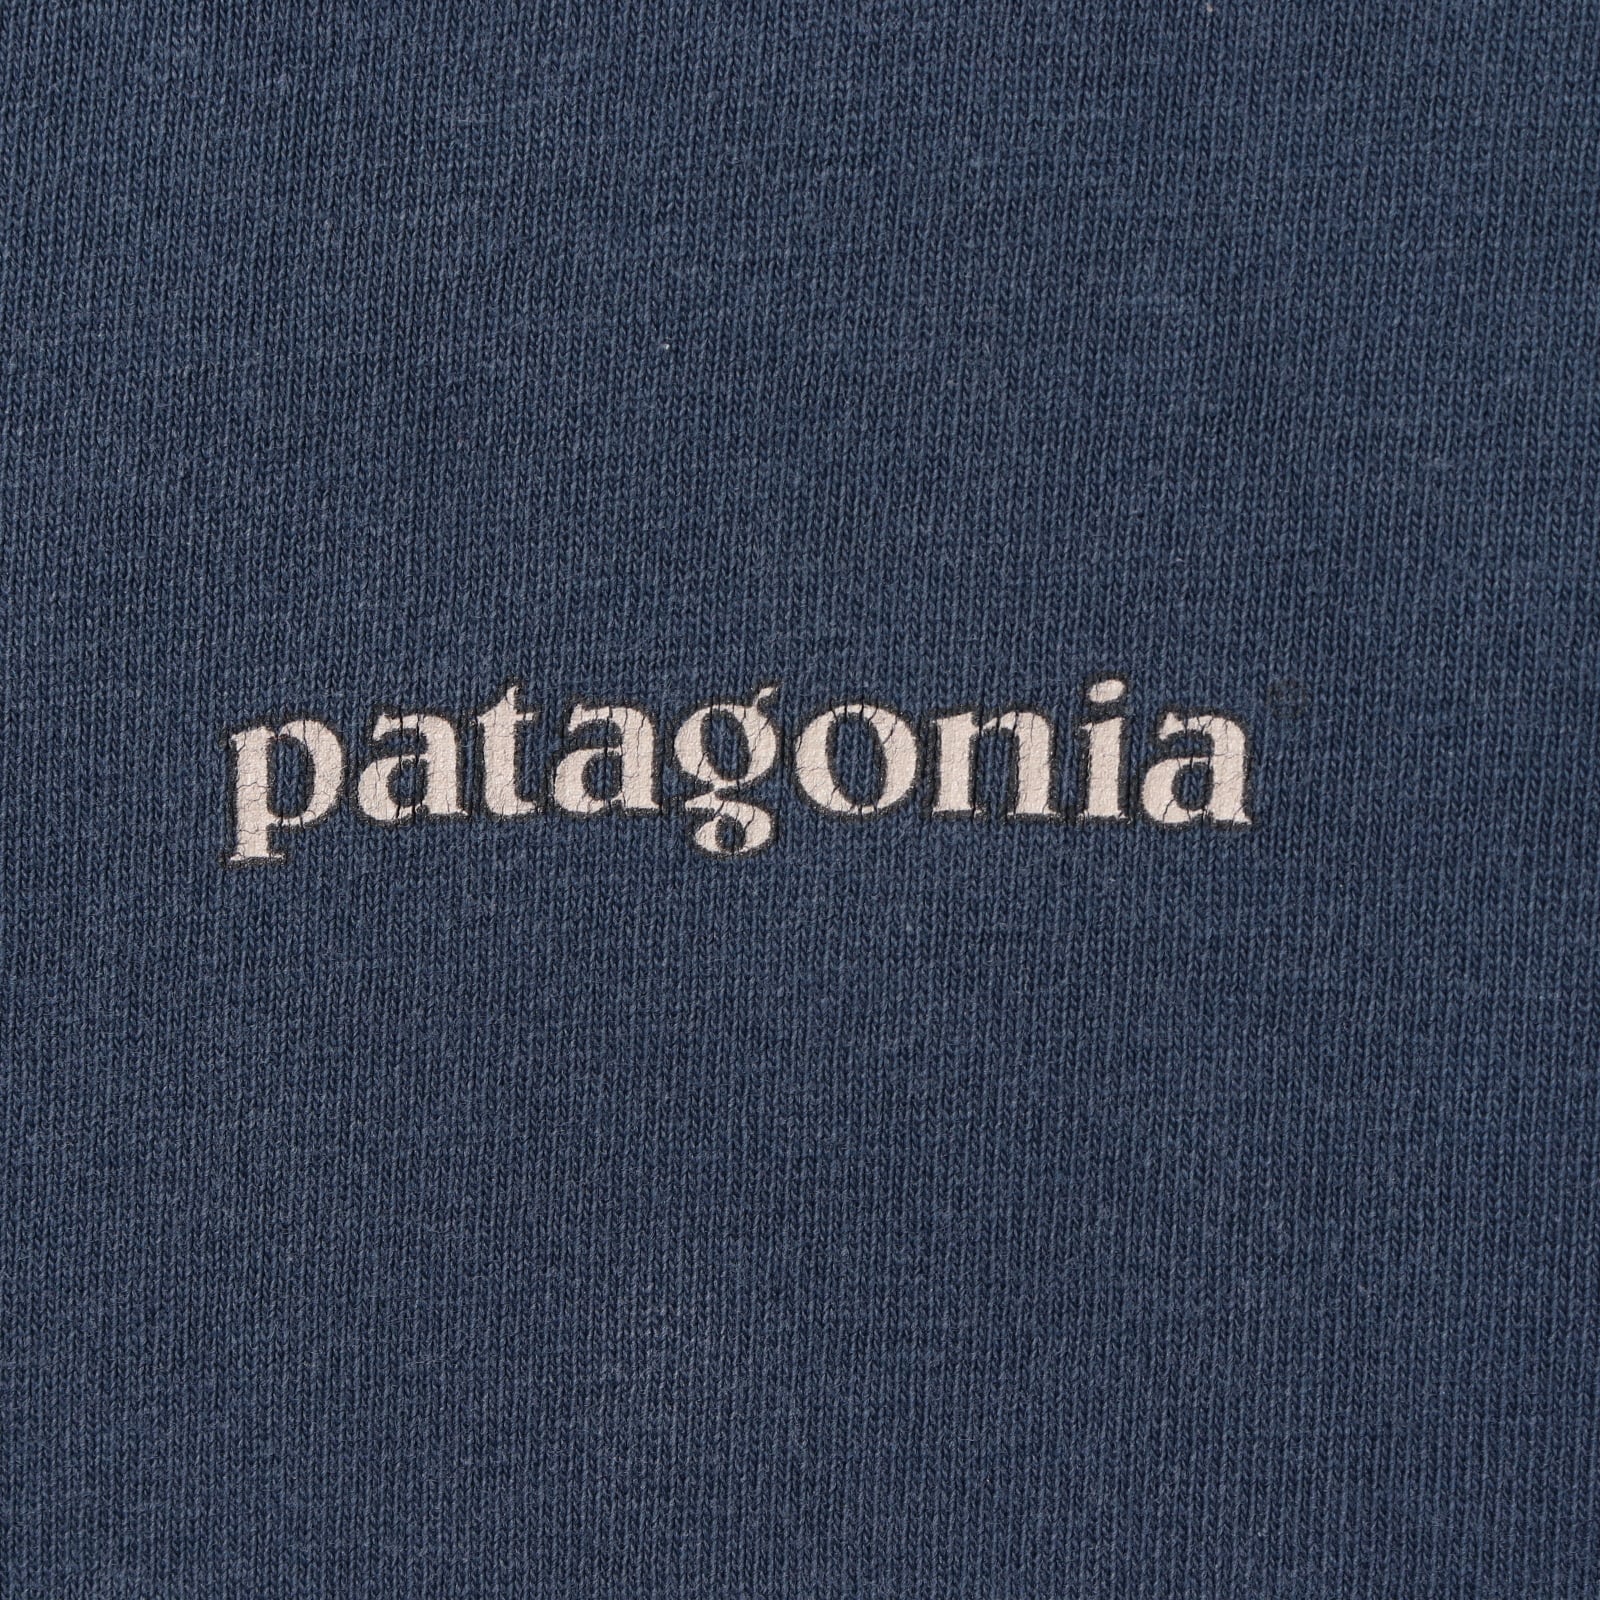 【90'sレア✨】パタゴニアハレイワ限定オーバルロゴBeneficial T's